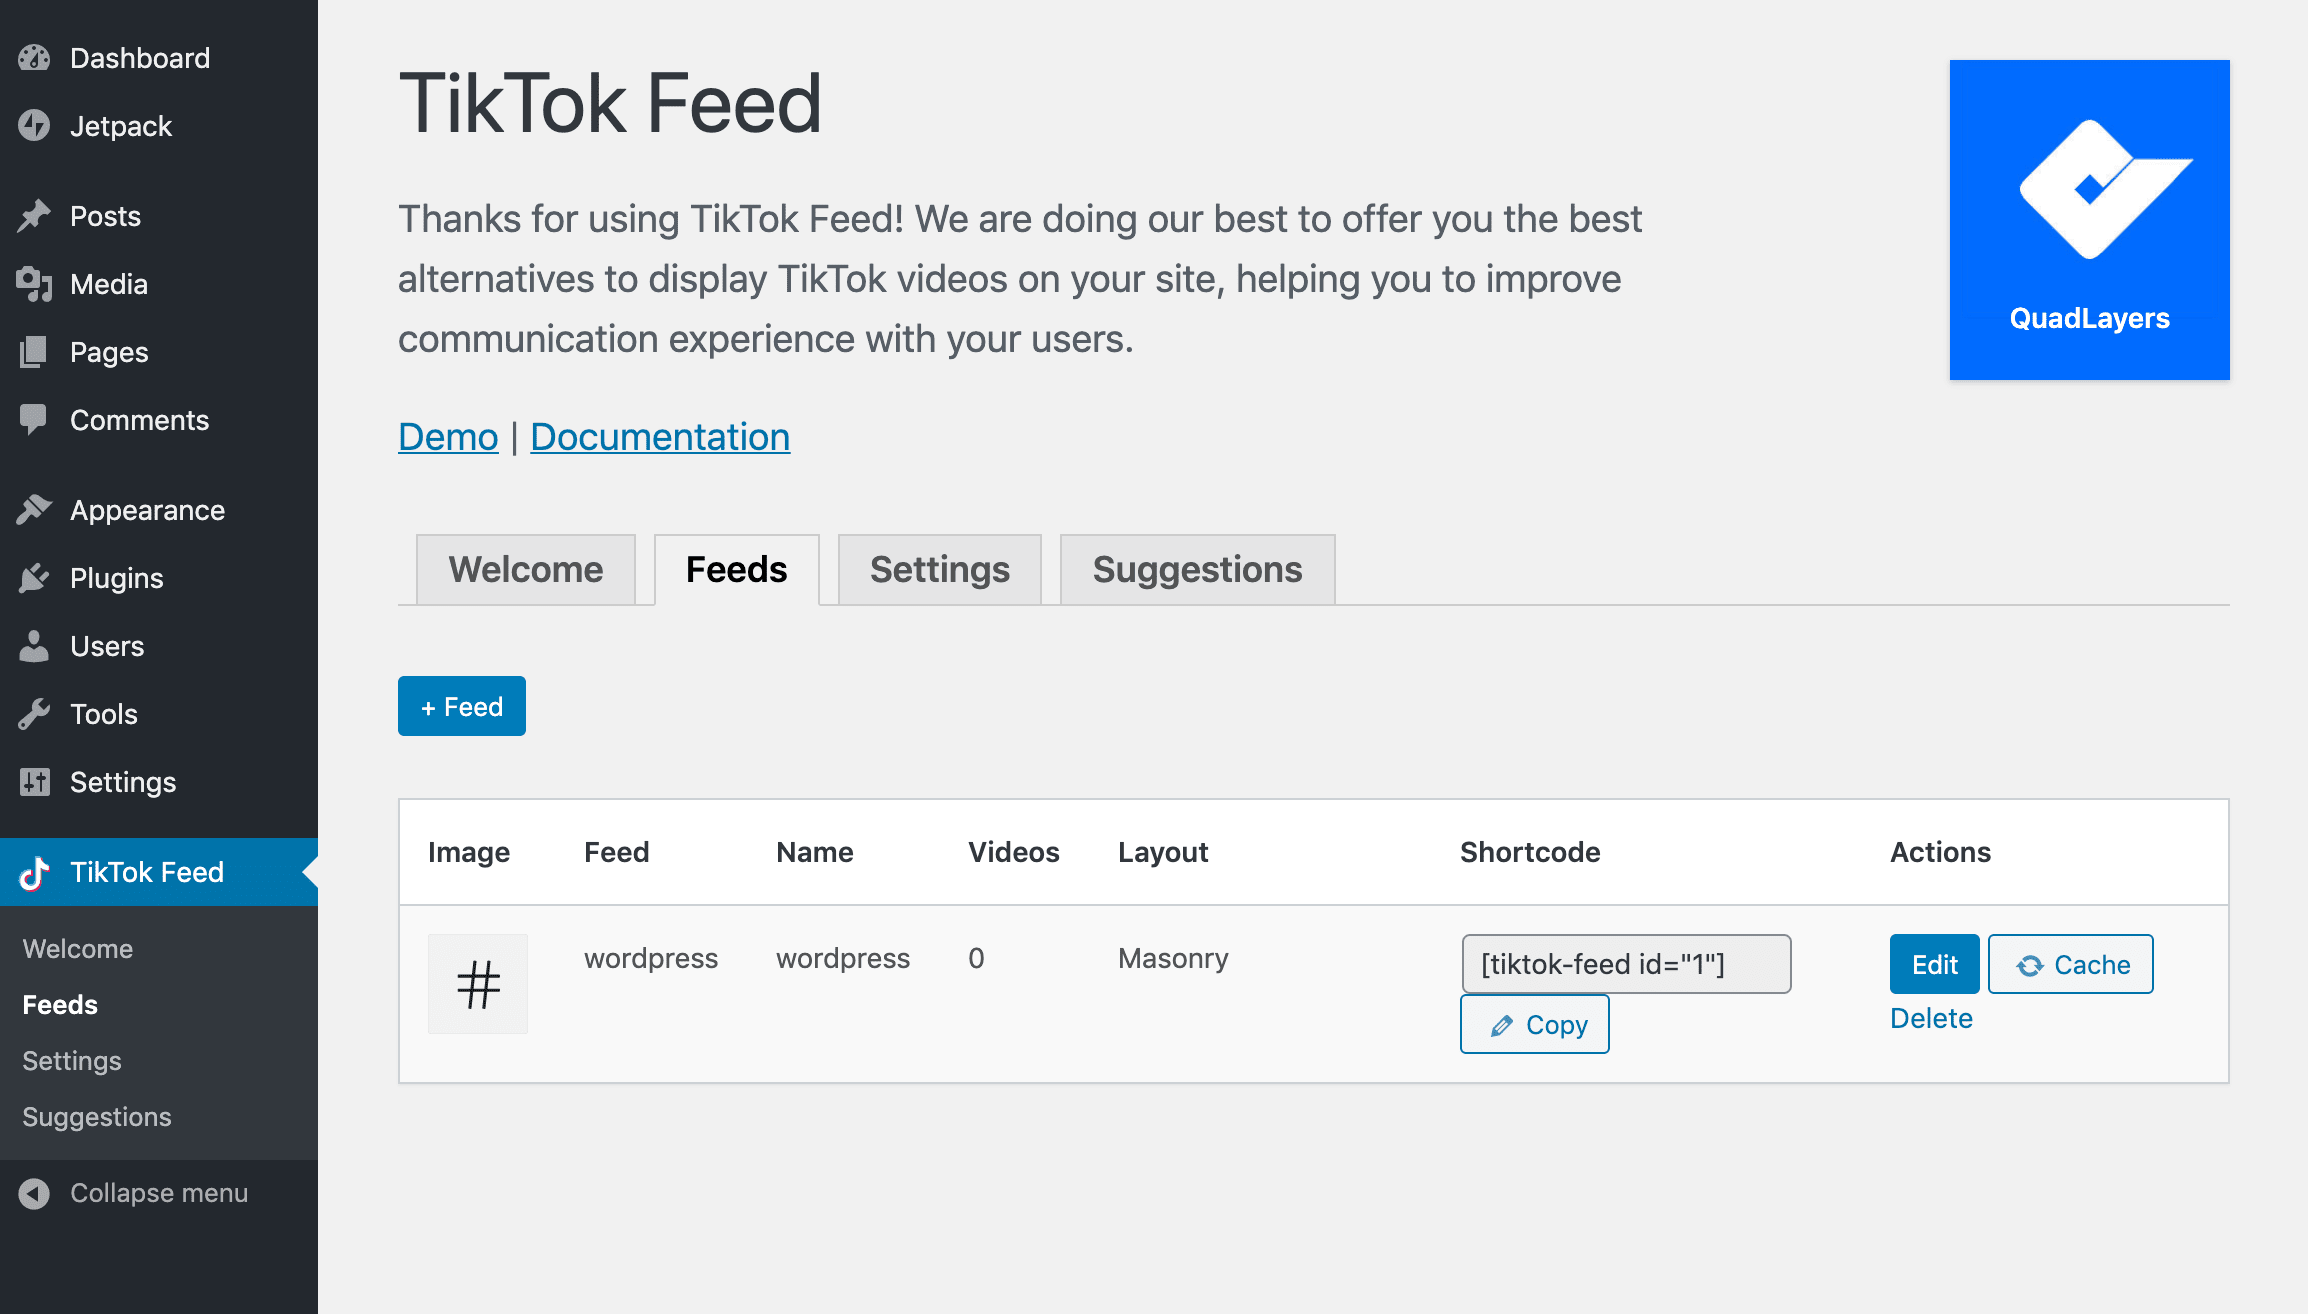 Adding a new TikTok feed.